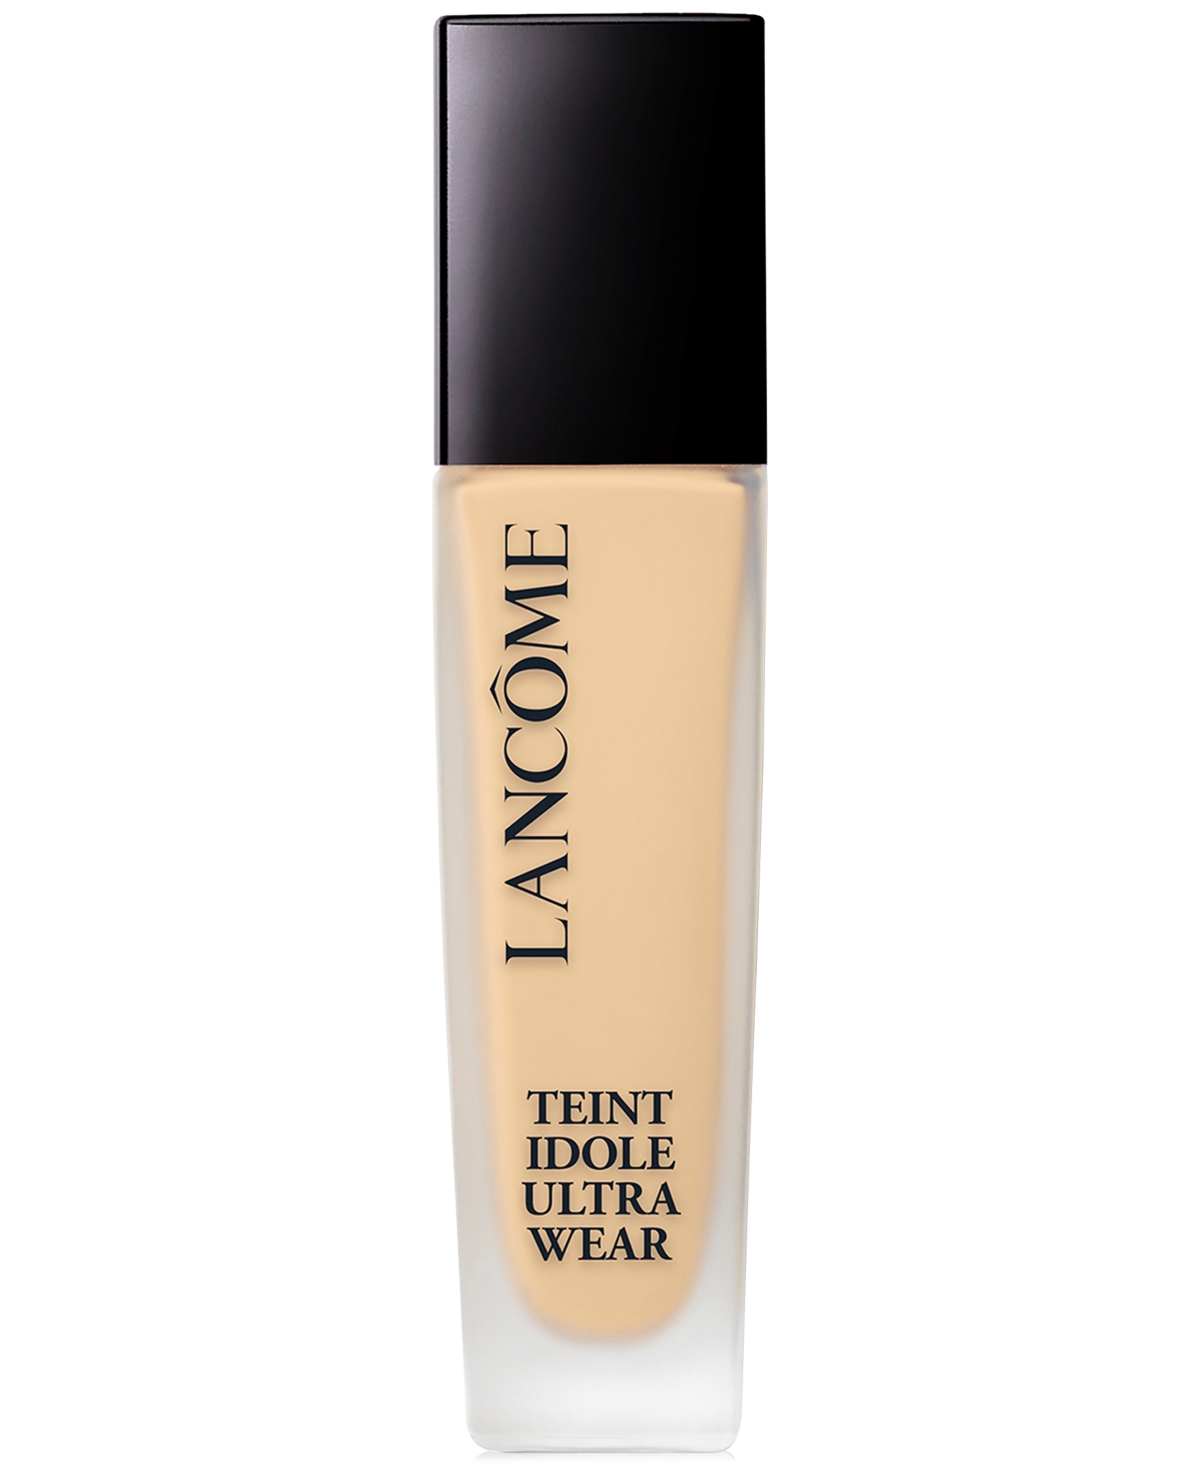 Lancôme Teint Idole Ultra Wear Foundation In W - Fair Skin With Warm,yellow Undertone